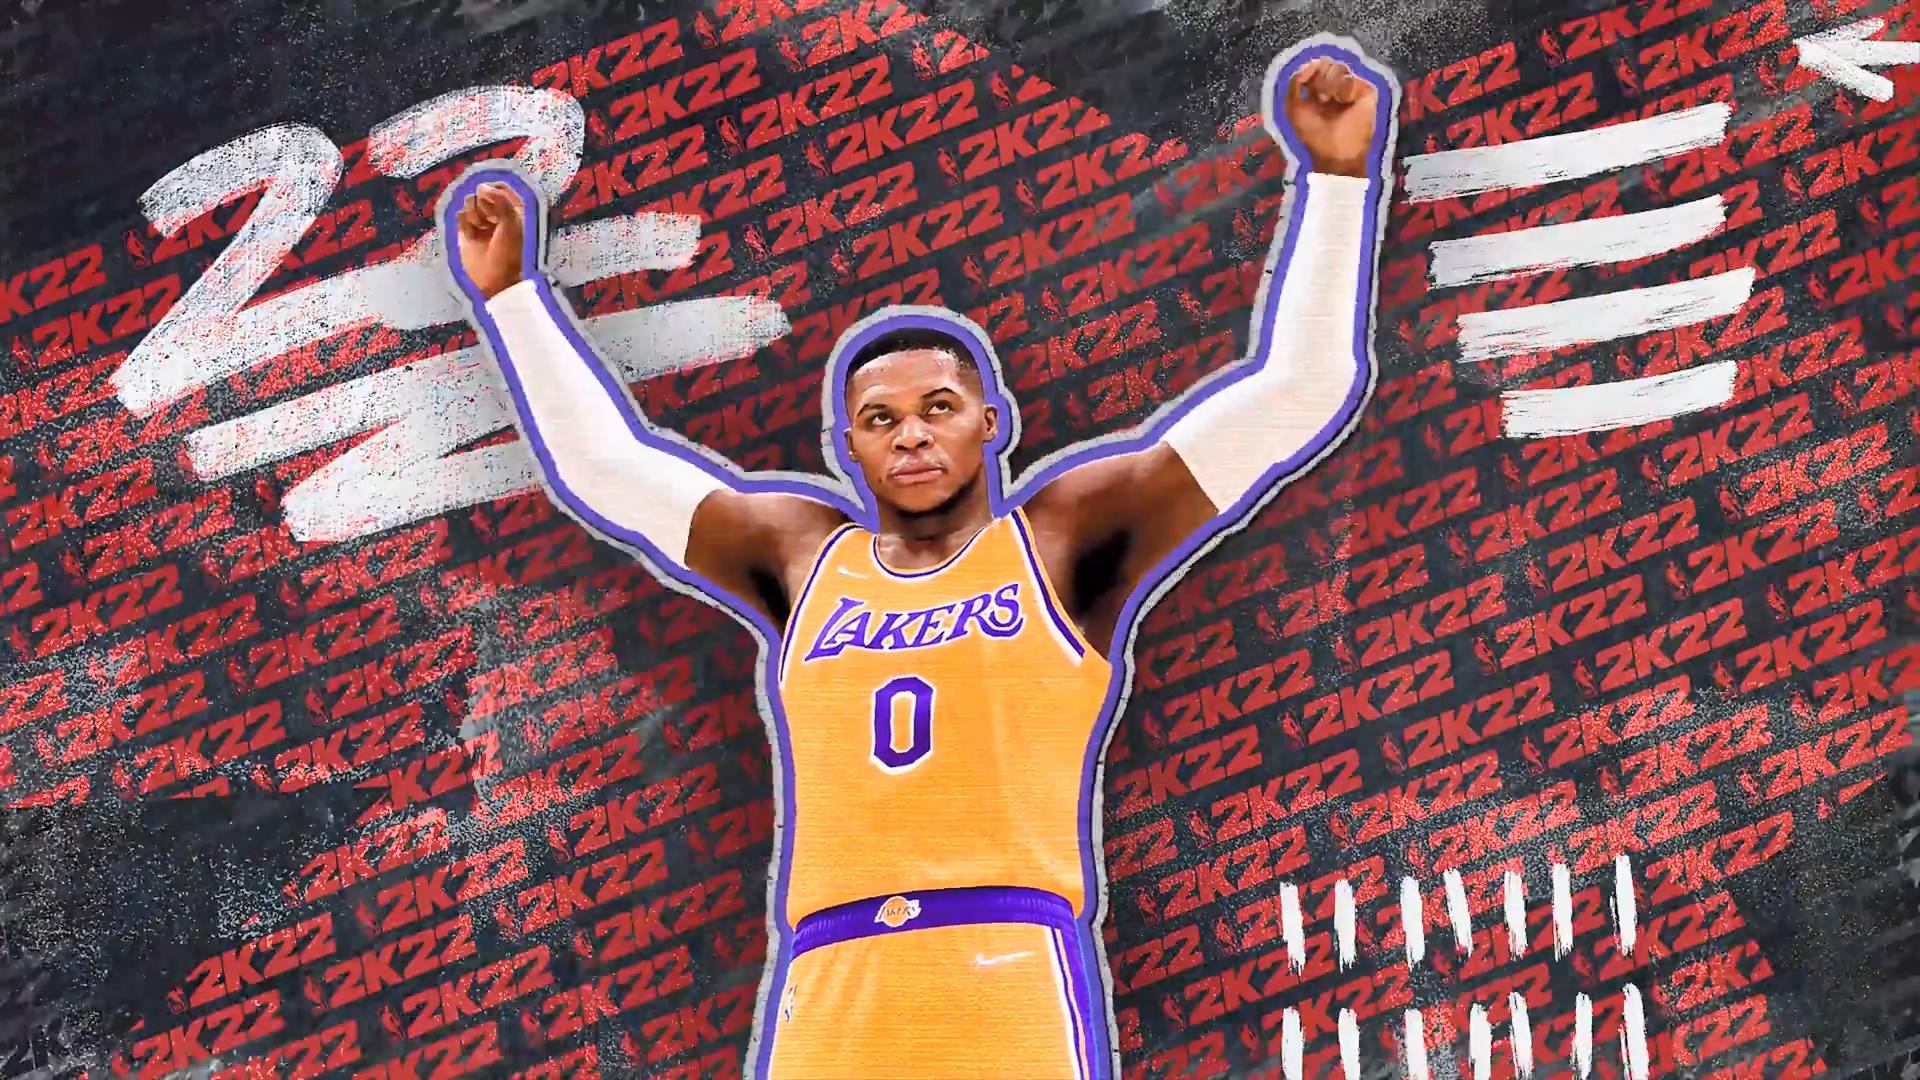 《NBA 2K22》实机演示预告片 9月10号正式发售